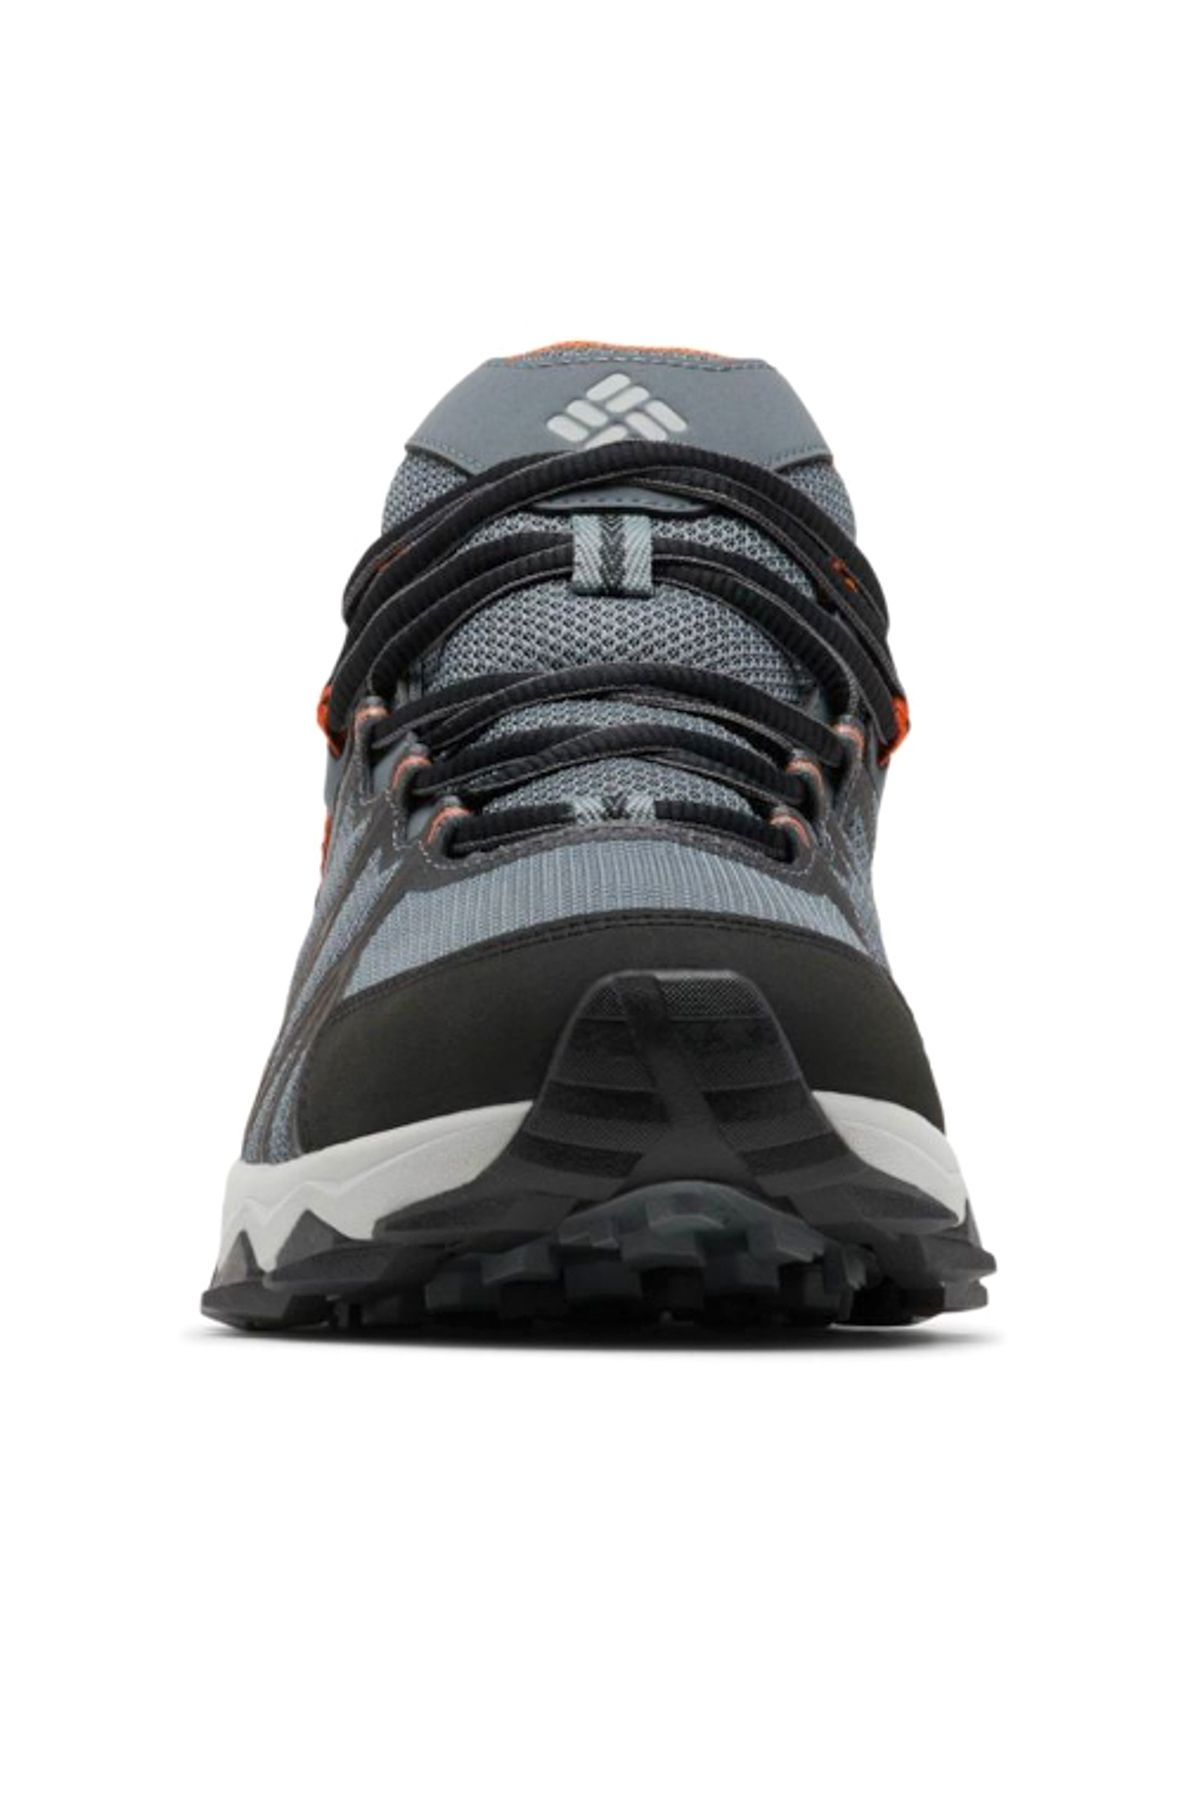 Columbia Peakfreak II Outdry Waterproof Walking Men's Outdoor Shoes  BM5953-053 - Trendyol